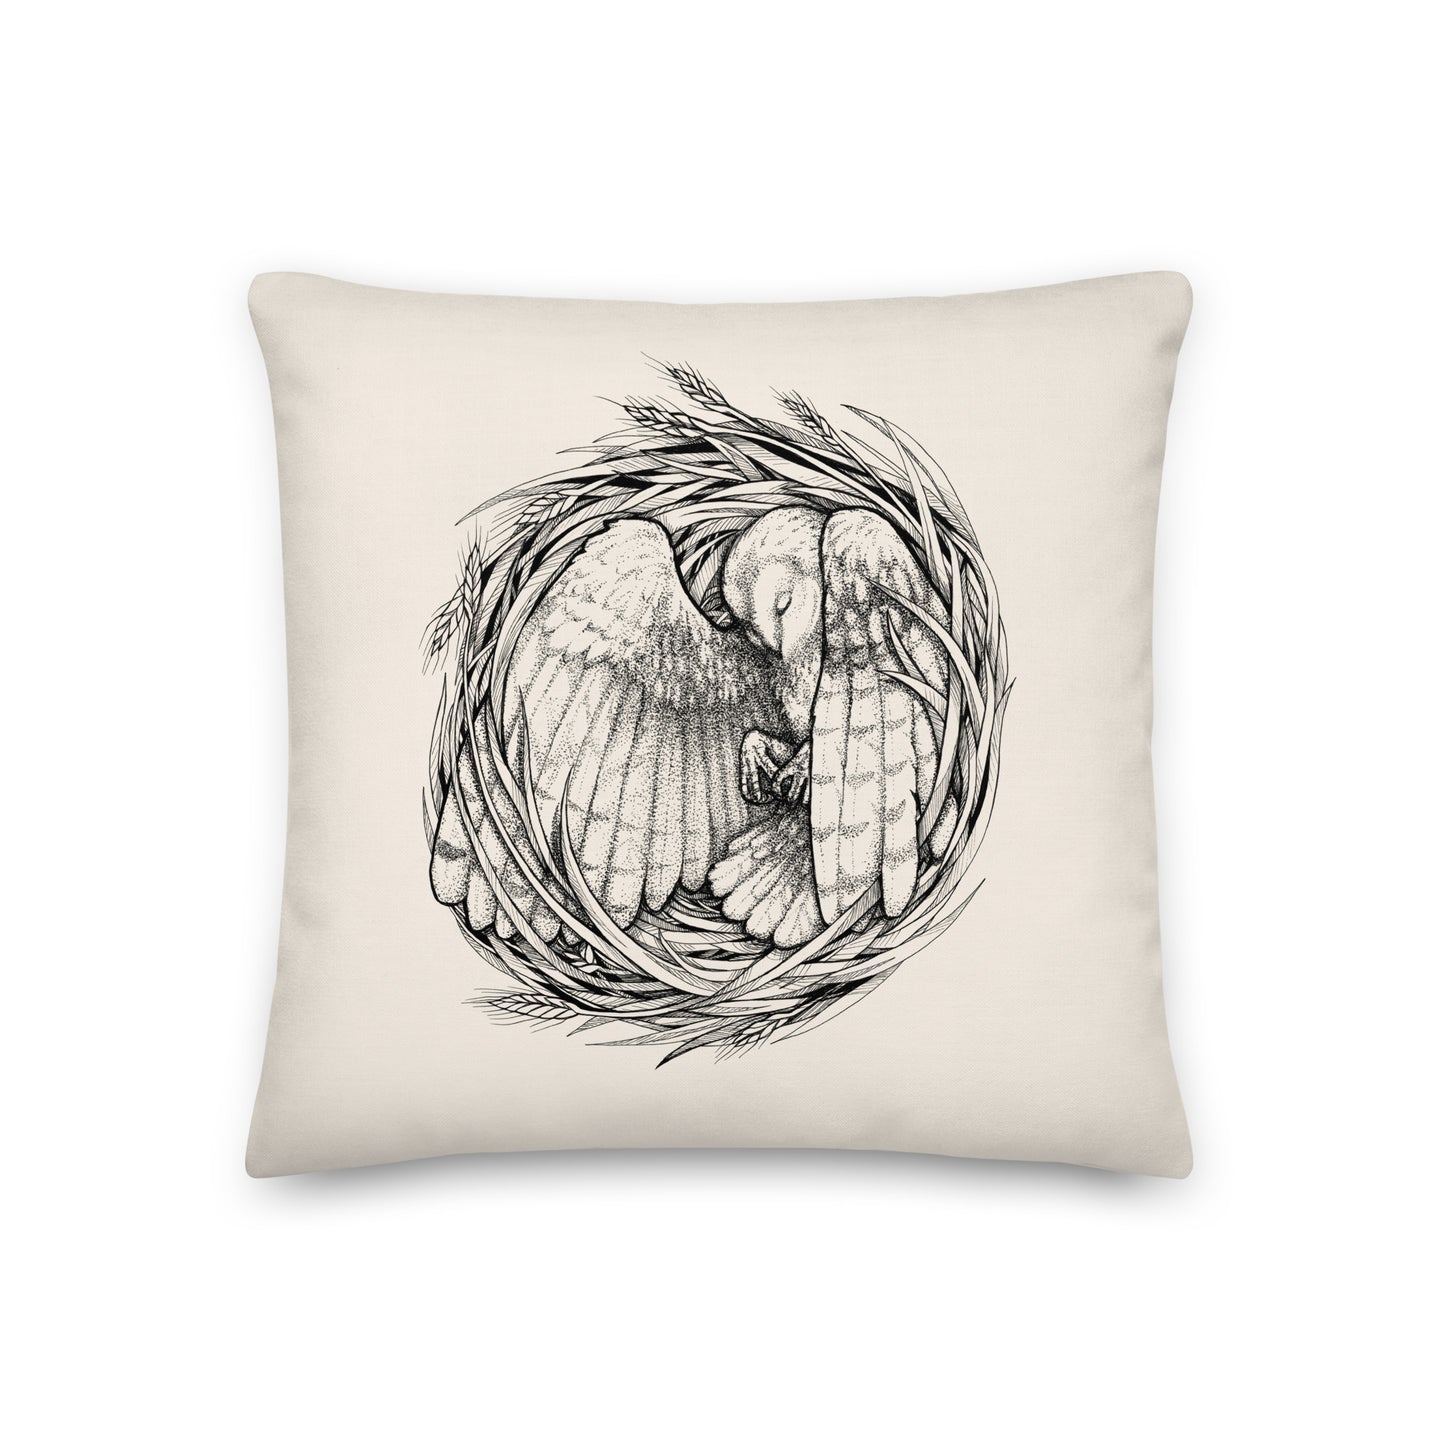 Nesting Series Pillow - Owl